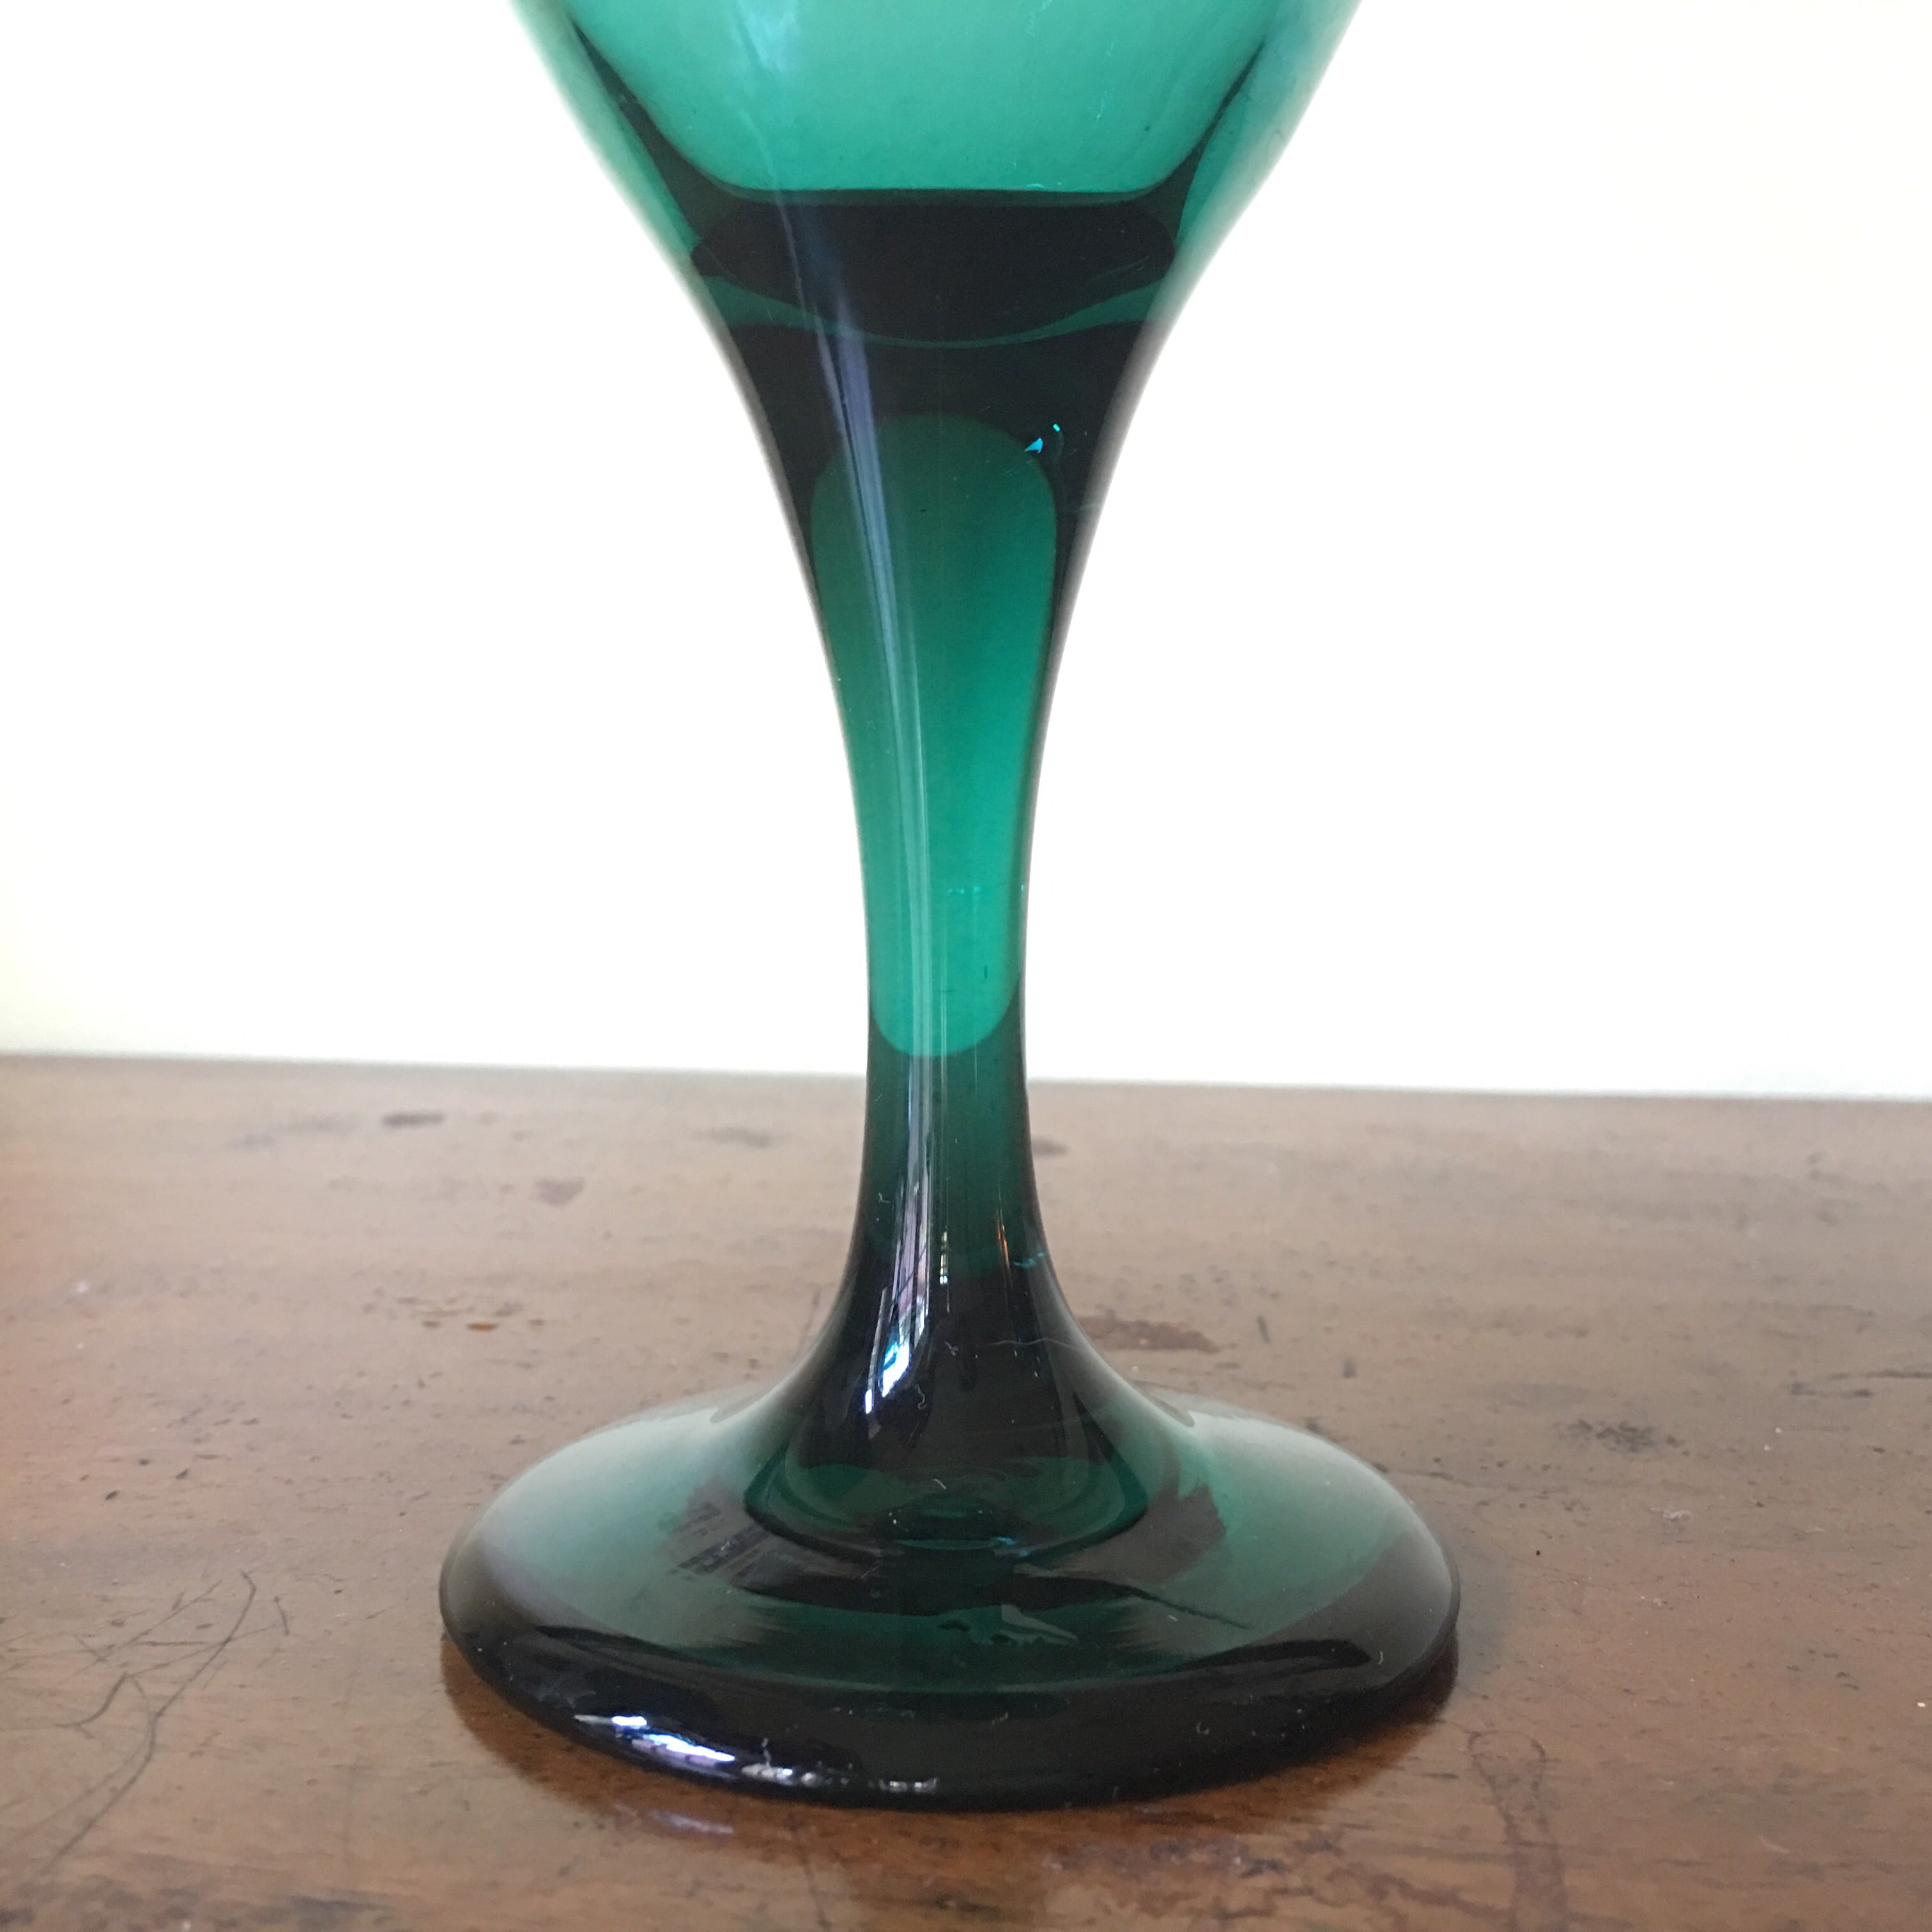 Vintage Emerald Wine Glasses (Set of 4)